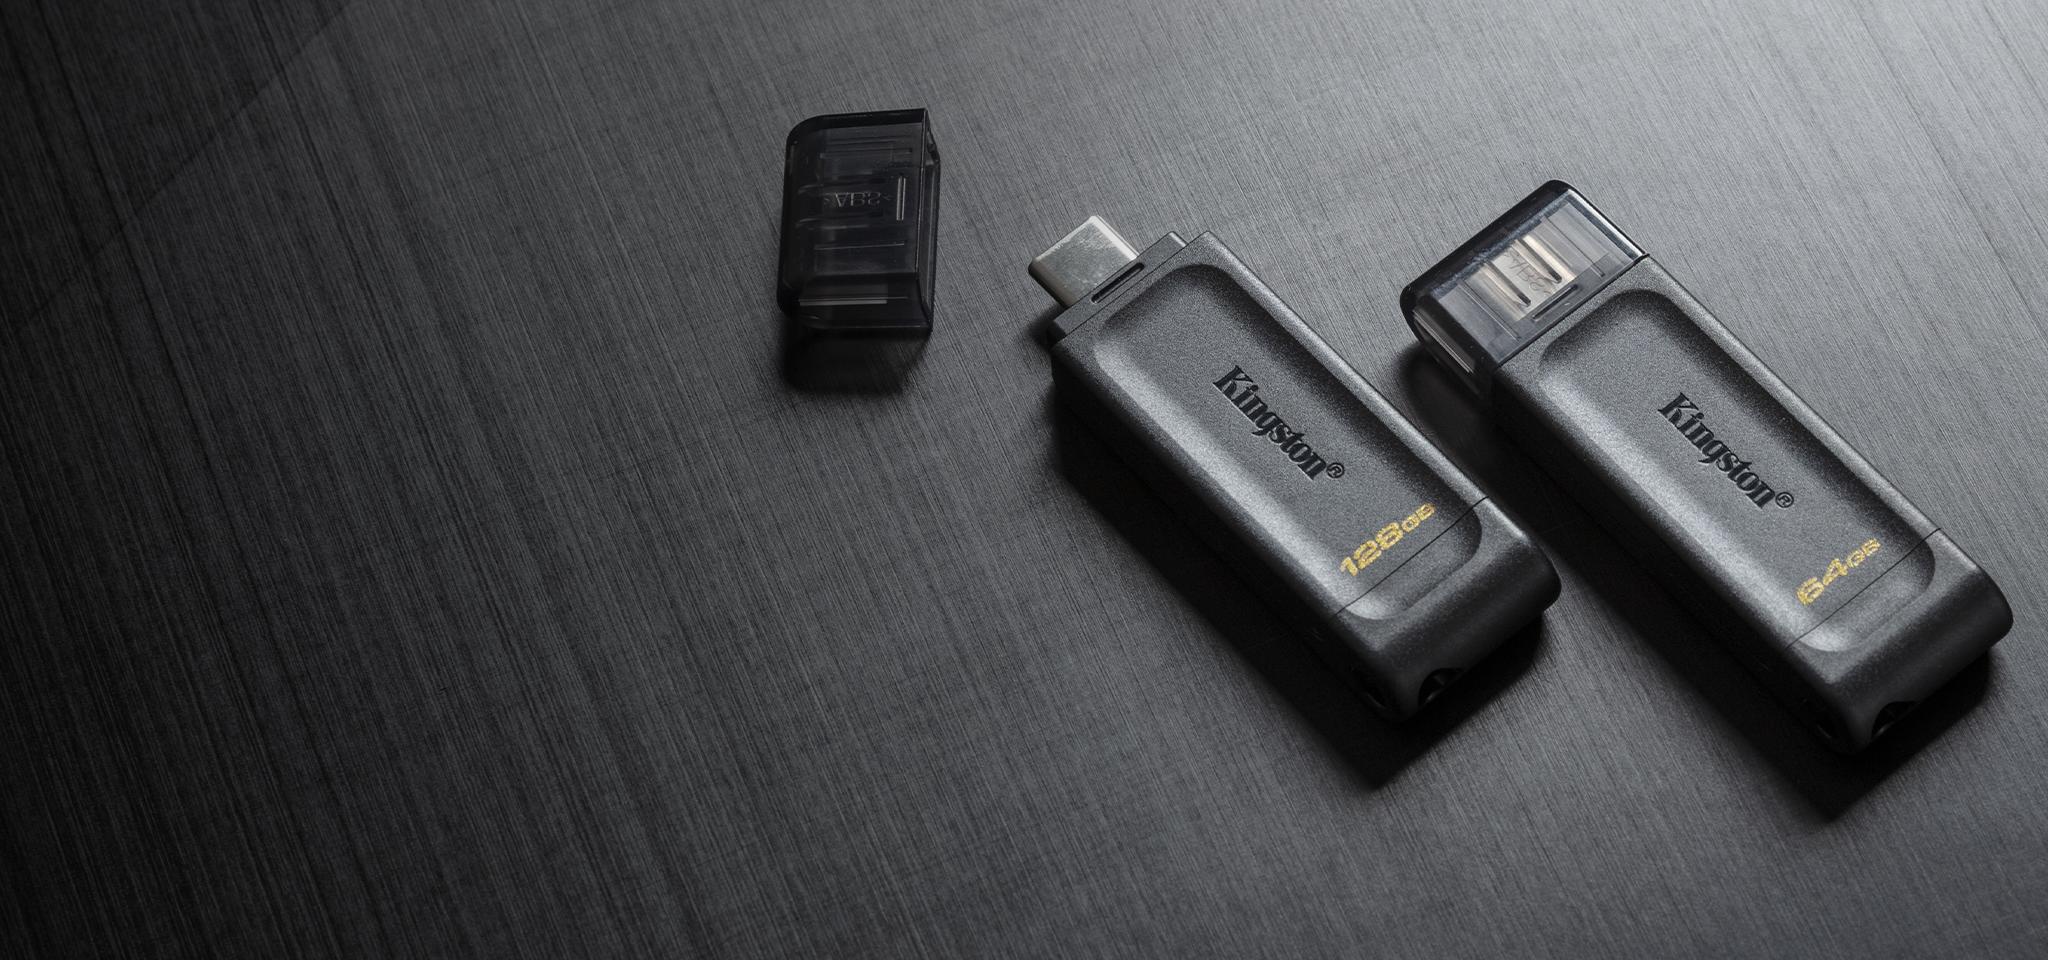 DataTraveler 70 USB-C 隨身碟